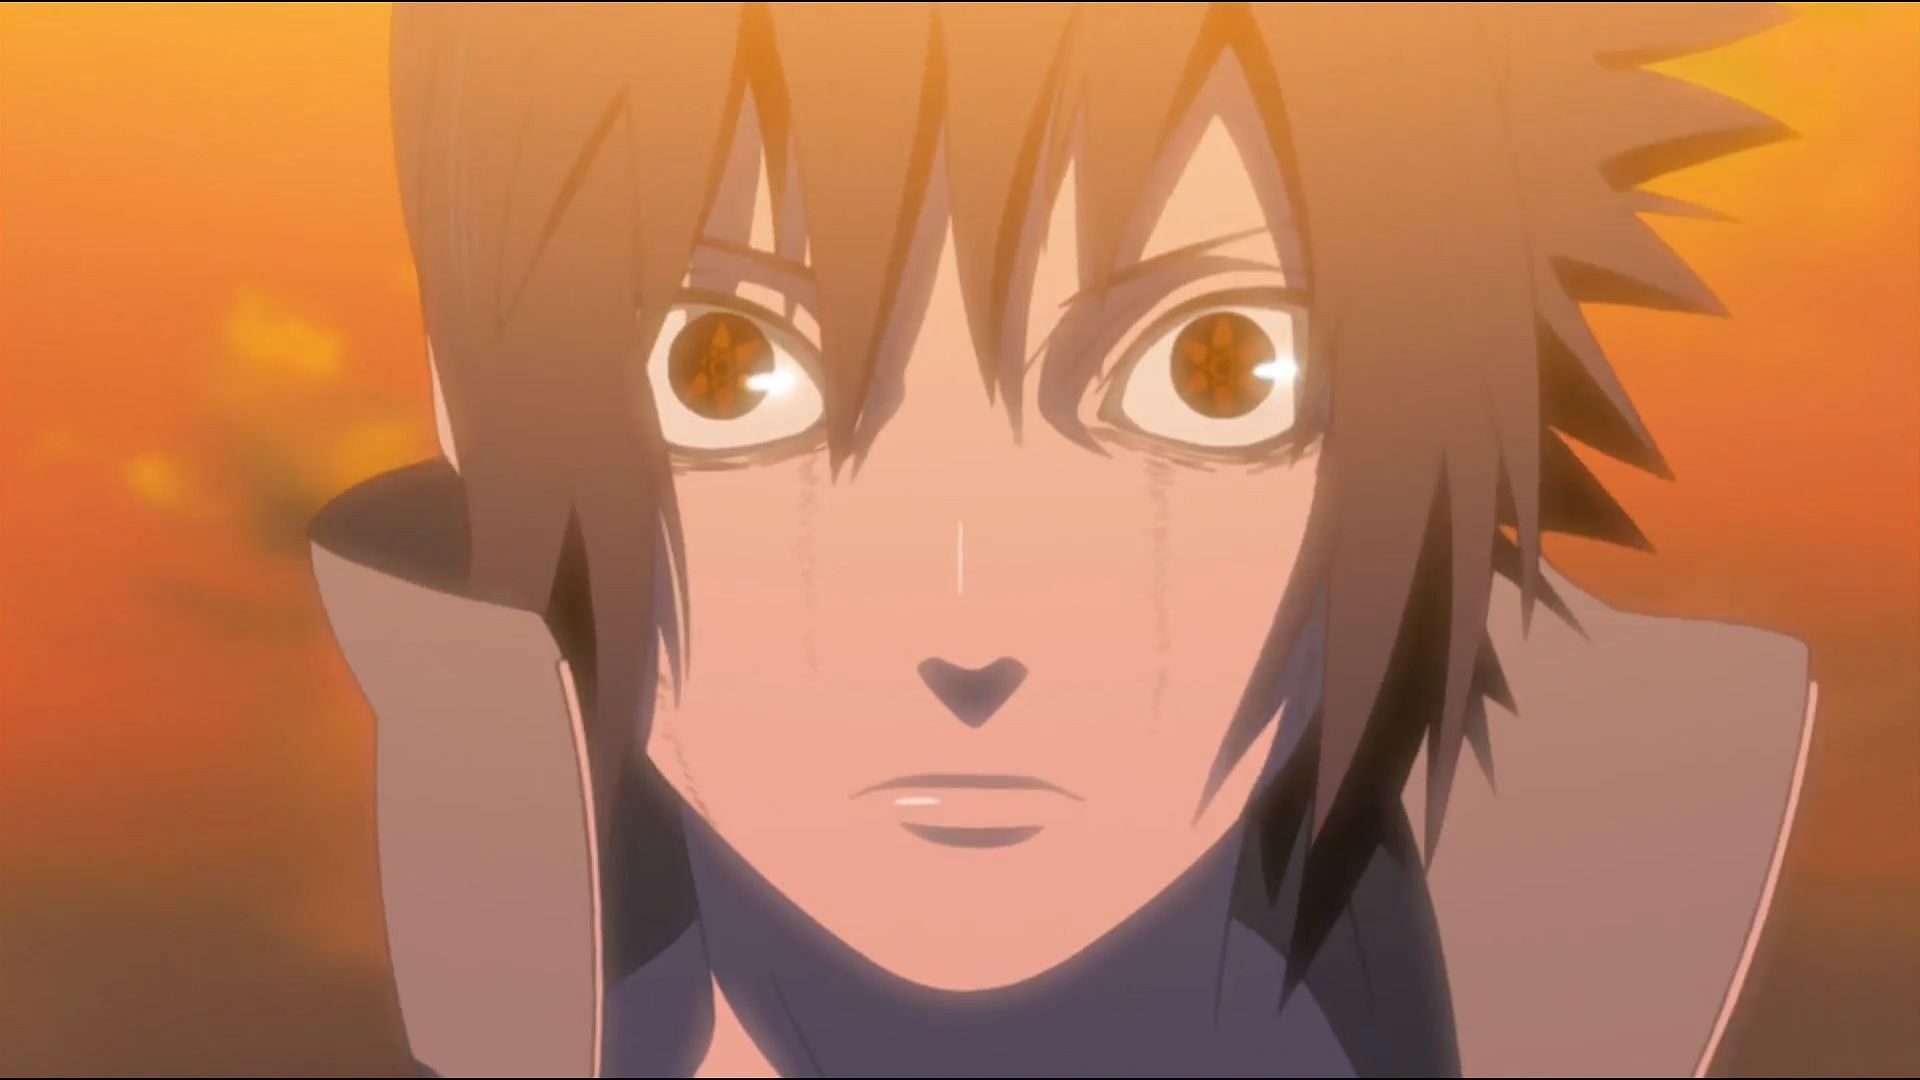 Sasuke as he appears in 'Naruto Shippuden' with his Mangekyo Sharingan active (Image via Studio Pierrot)